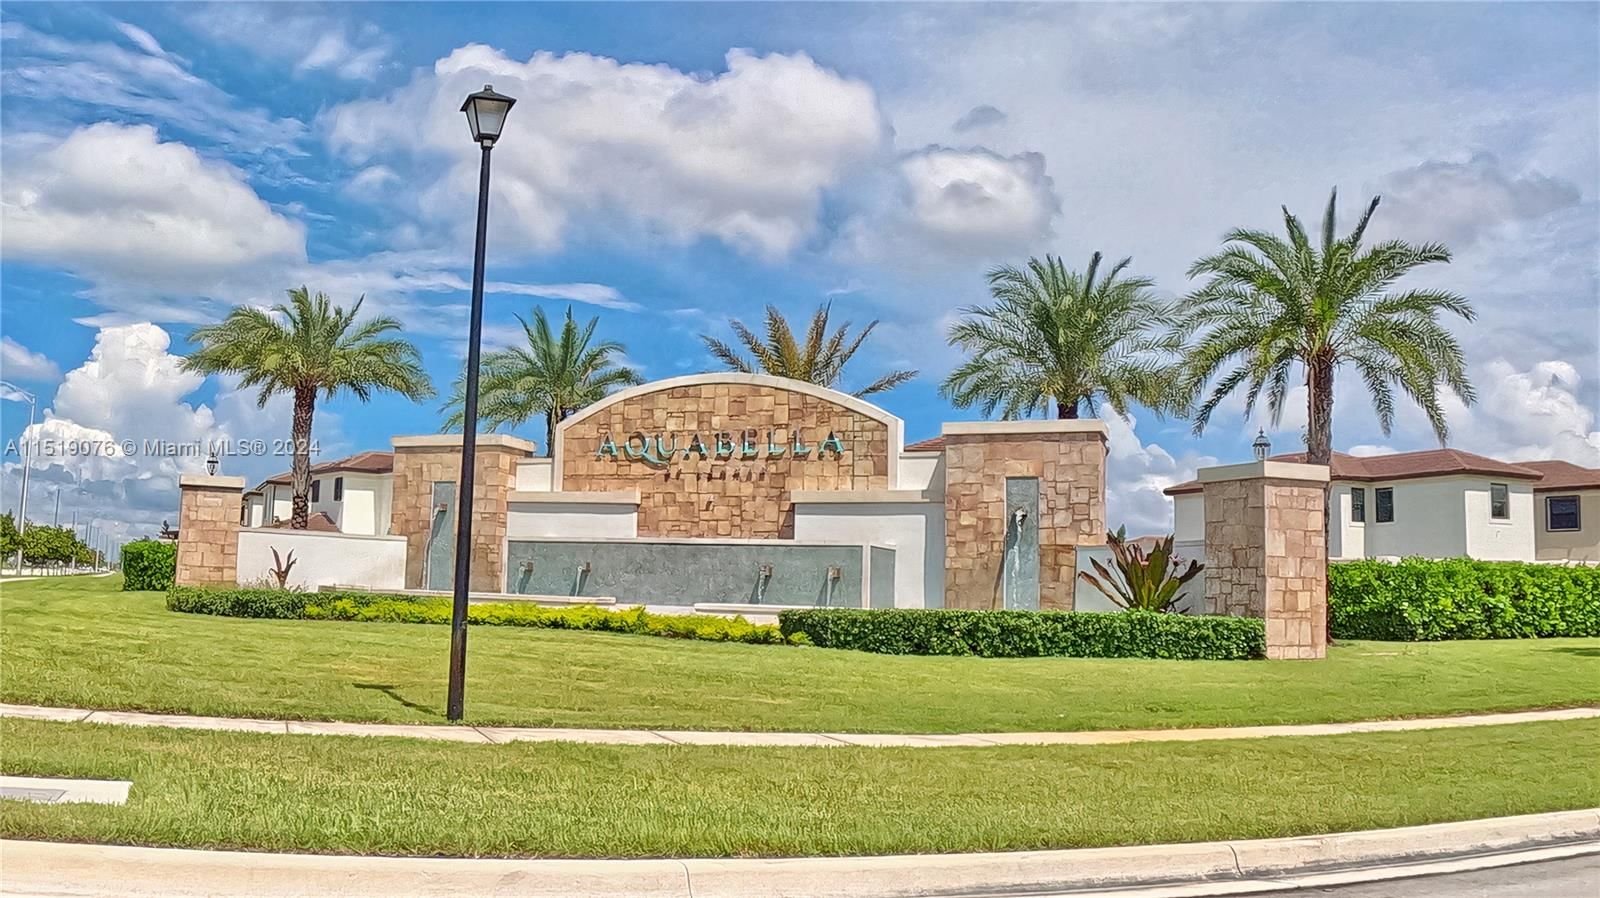 Real estate property located at 11416 33rd Way #11416, Miami-Dade County, AQUABELLA NORTH, Hialeah, FL